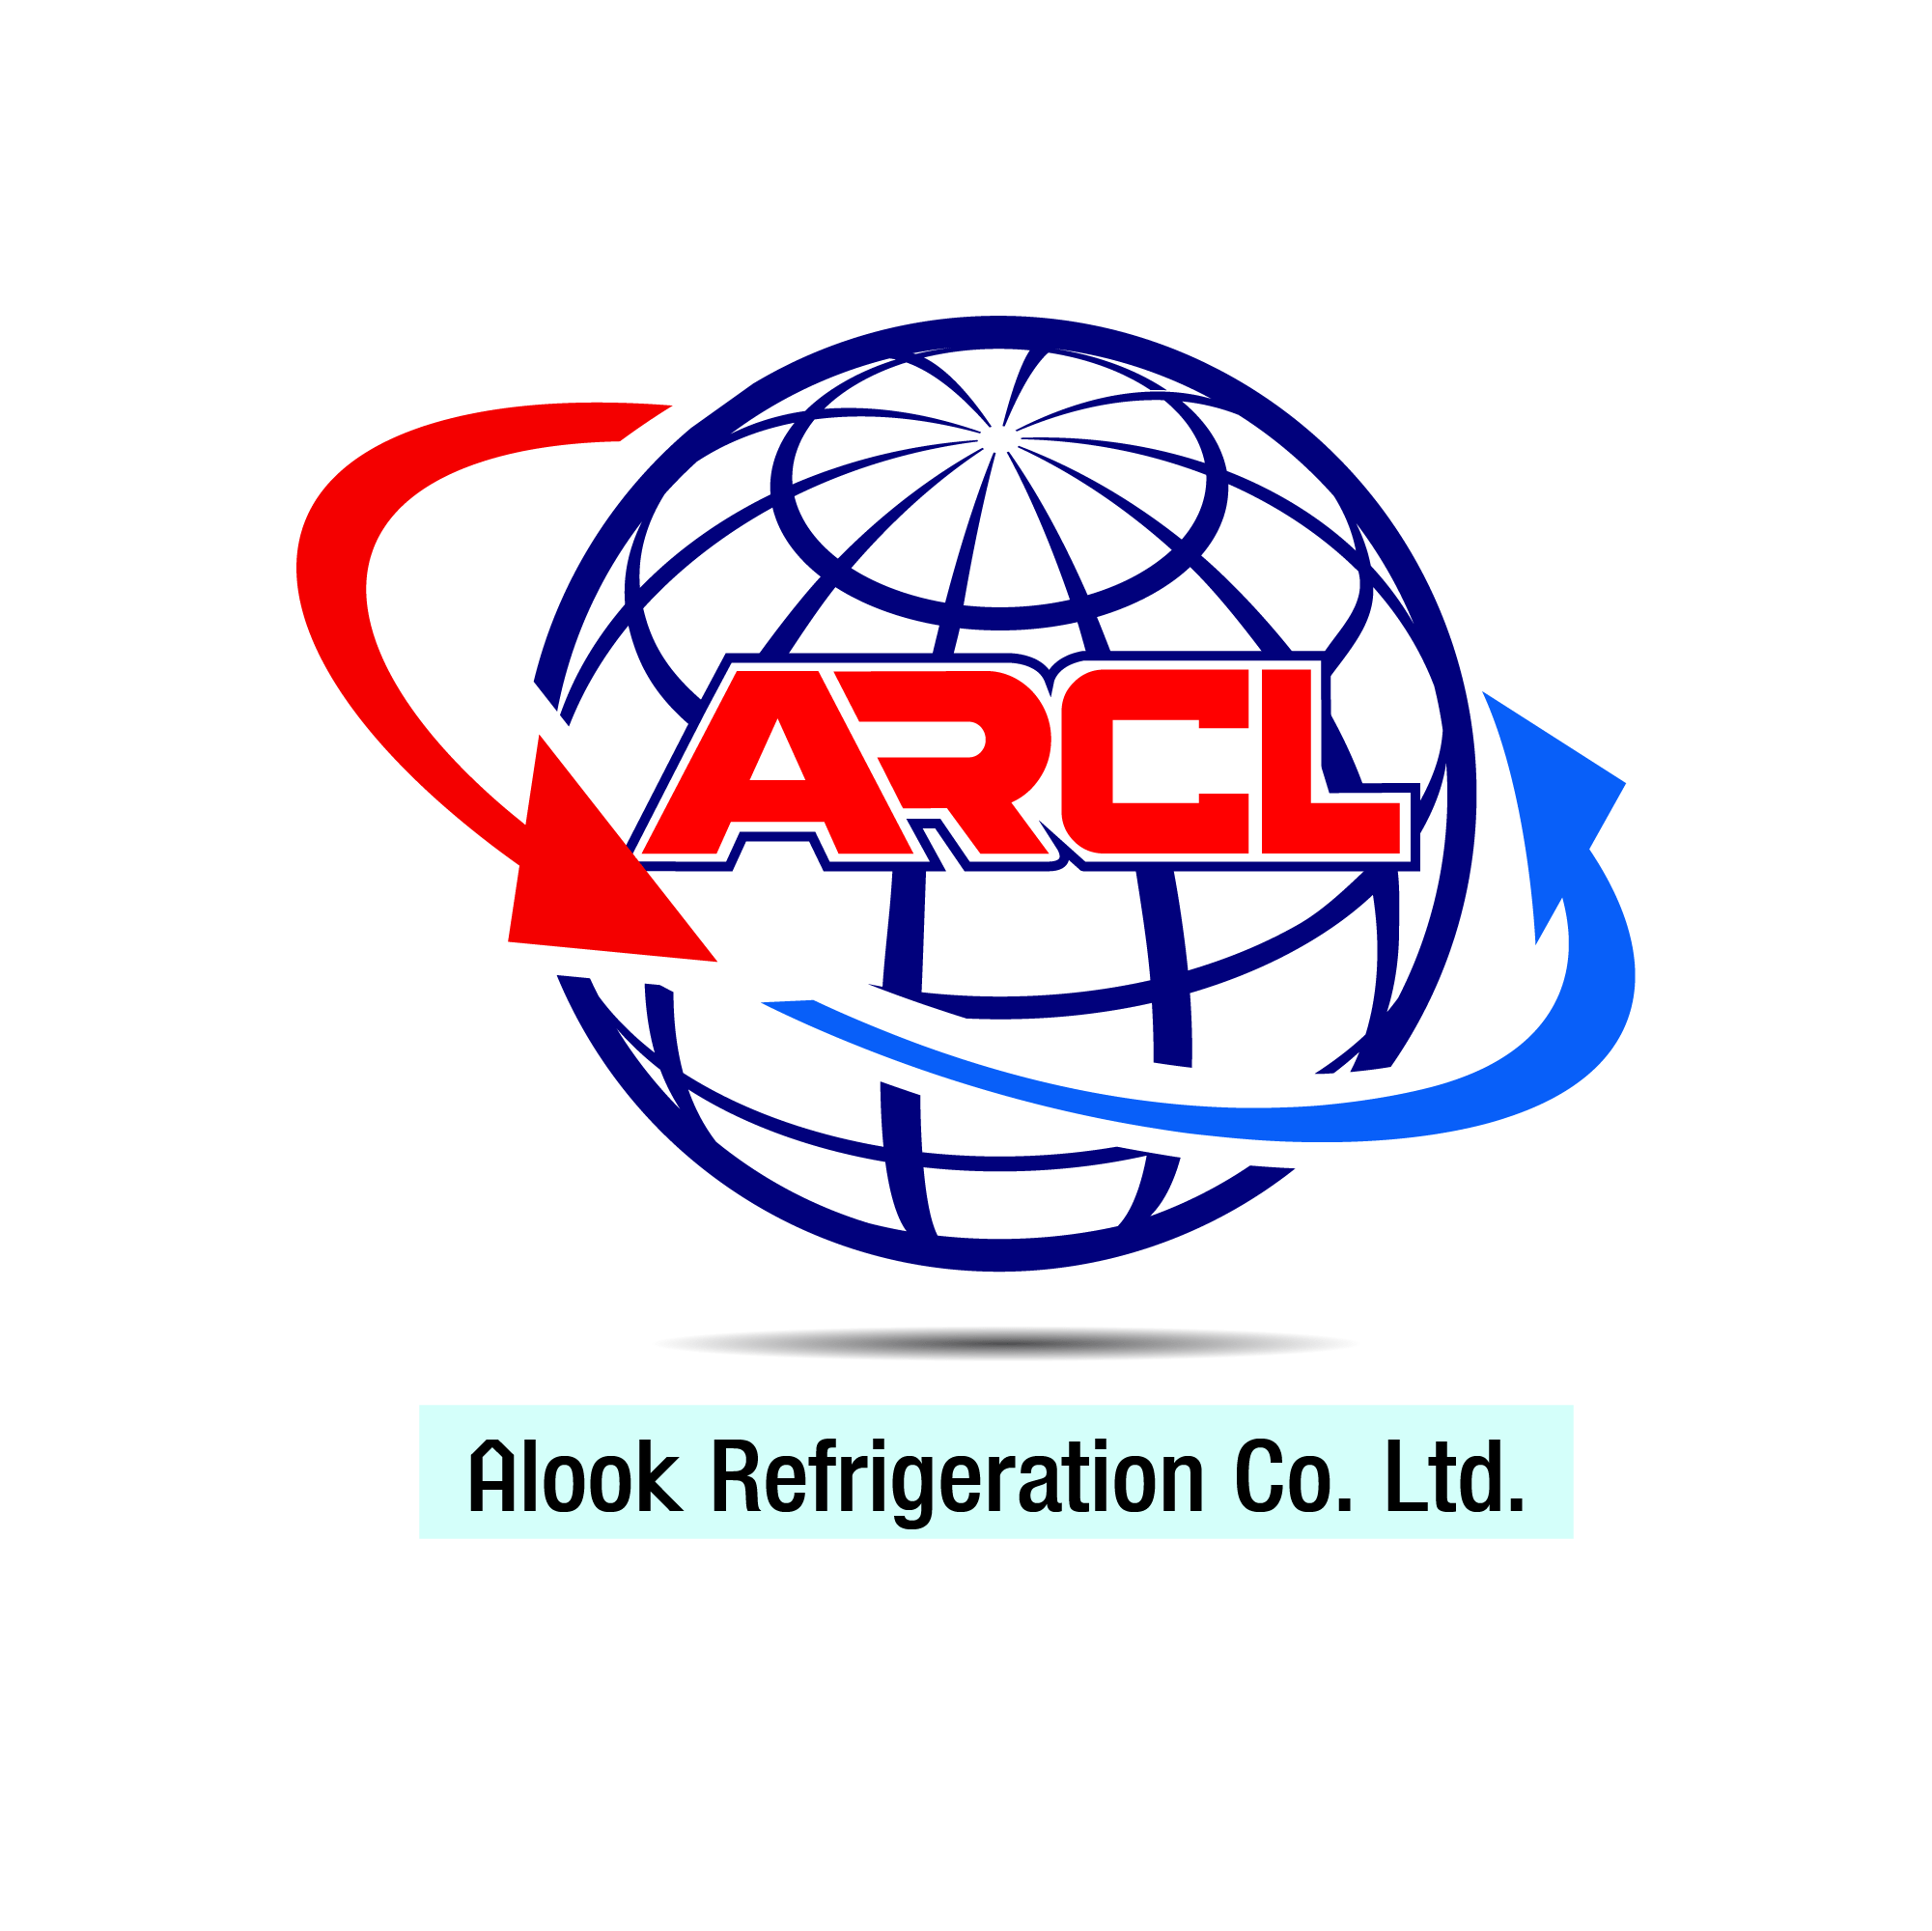 Alook Refrigeration Co. Ltd